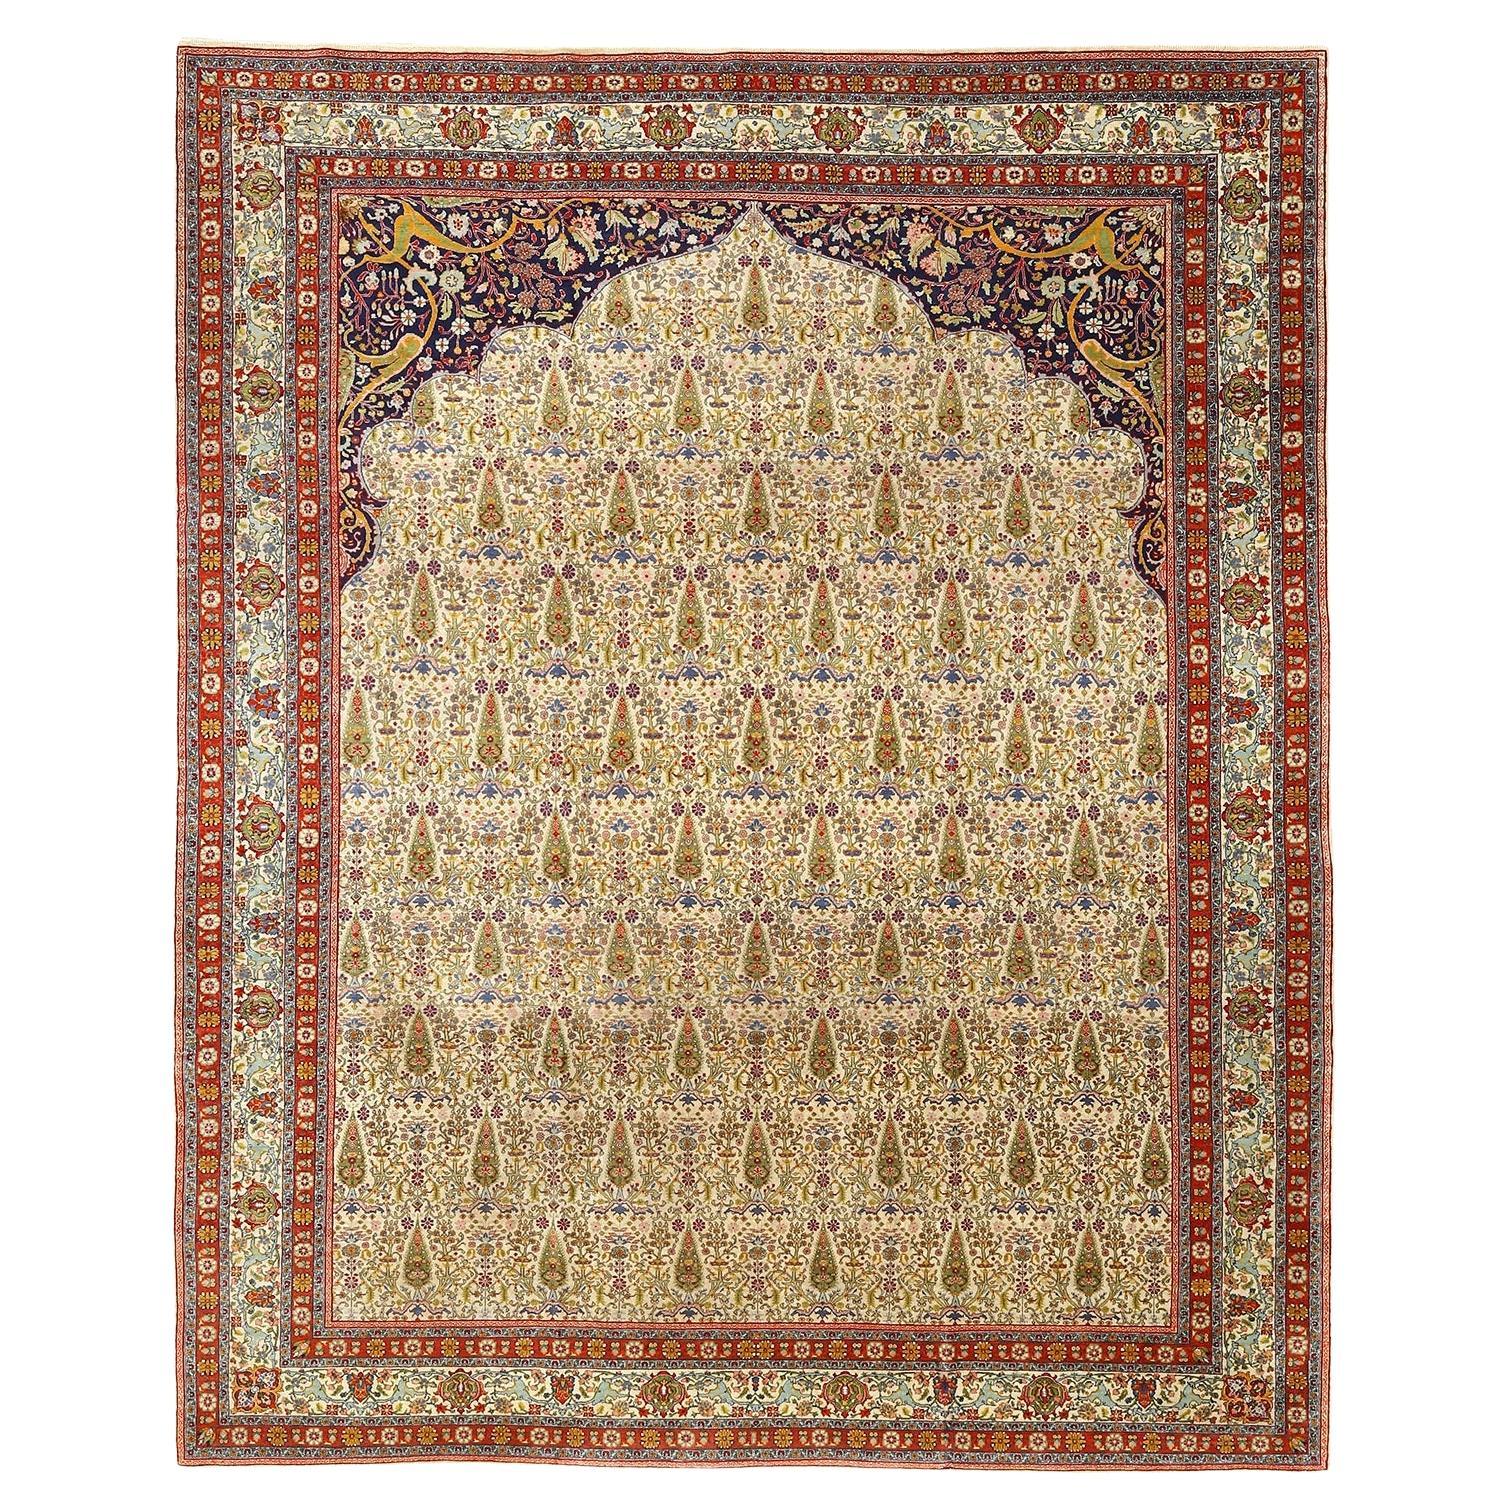 Collection Damoka Tabriz persane ancienne - Taille : 9 pieds 10 pouces x 8 pieds 1 pouces